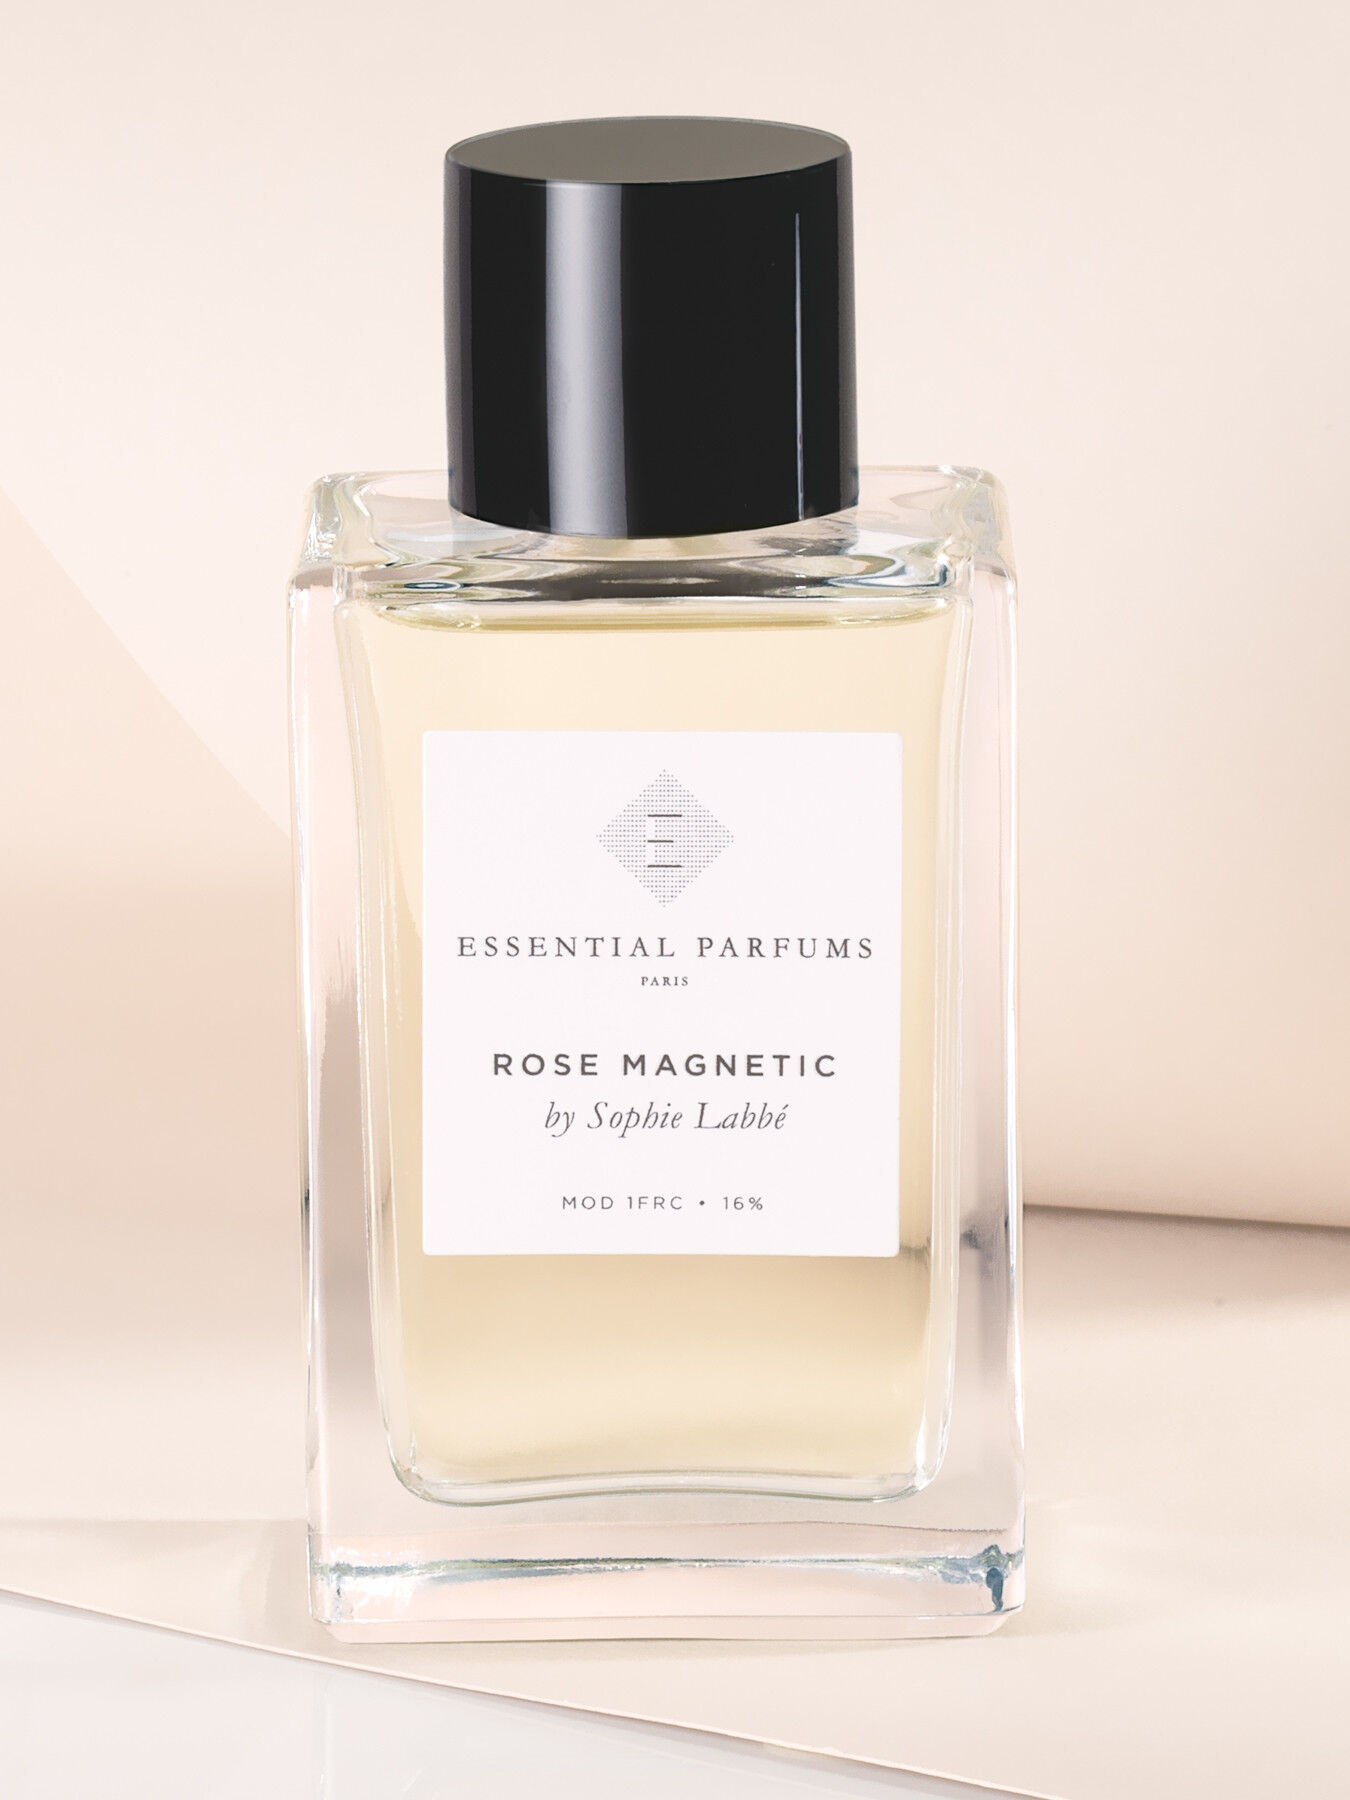 Essential parfums paris bergamote. Essential Parfums Rose Magnetic EDP 2ml. Essential Parfums Paris. Essential Parfums Rose Magnetic 100 мл. Духи Rose Magnetic by Sophie Labbe.